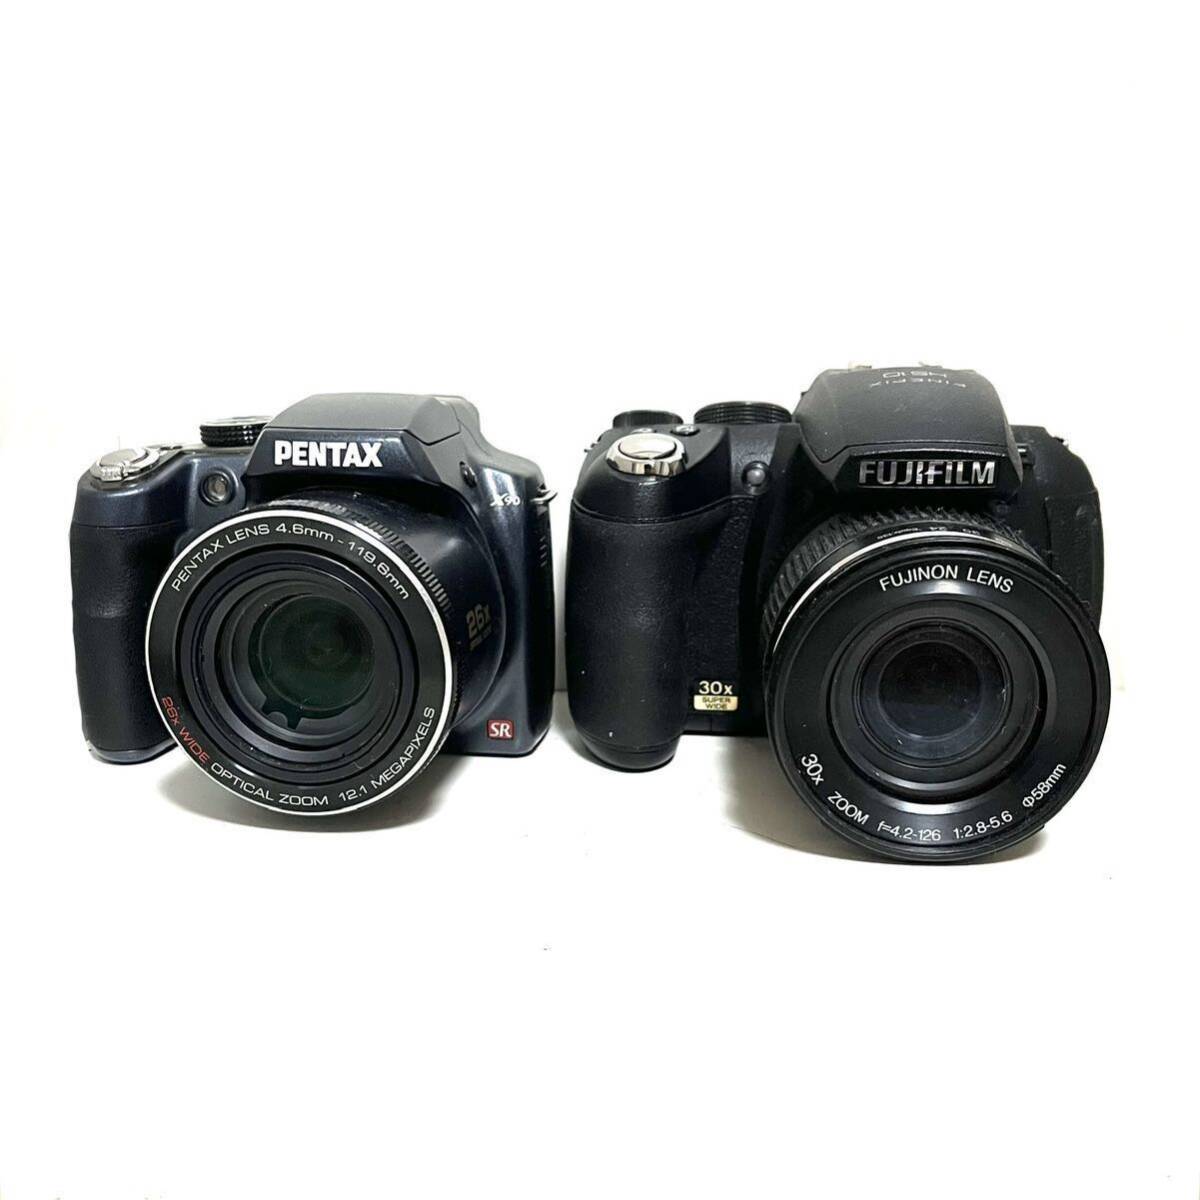 FUJIFILM finepix HS10 PENTAX X90 まとめ売り デジタルカメラ ジャンクの画像1